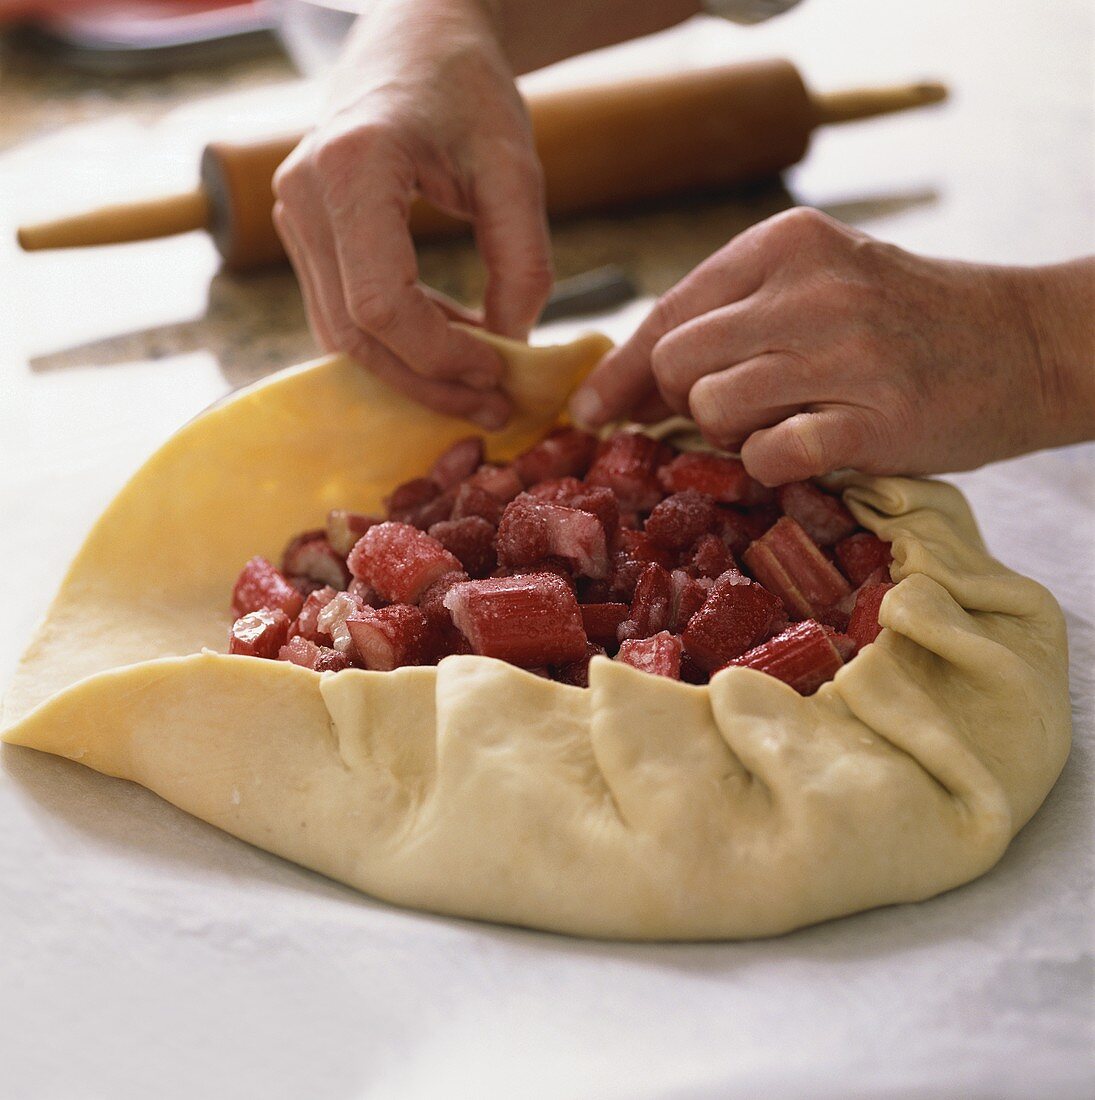 Making a Rhubarb Tart, Hands Forming Crust